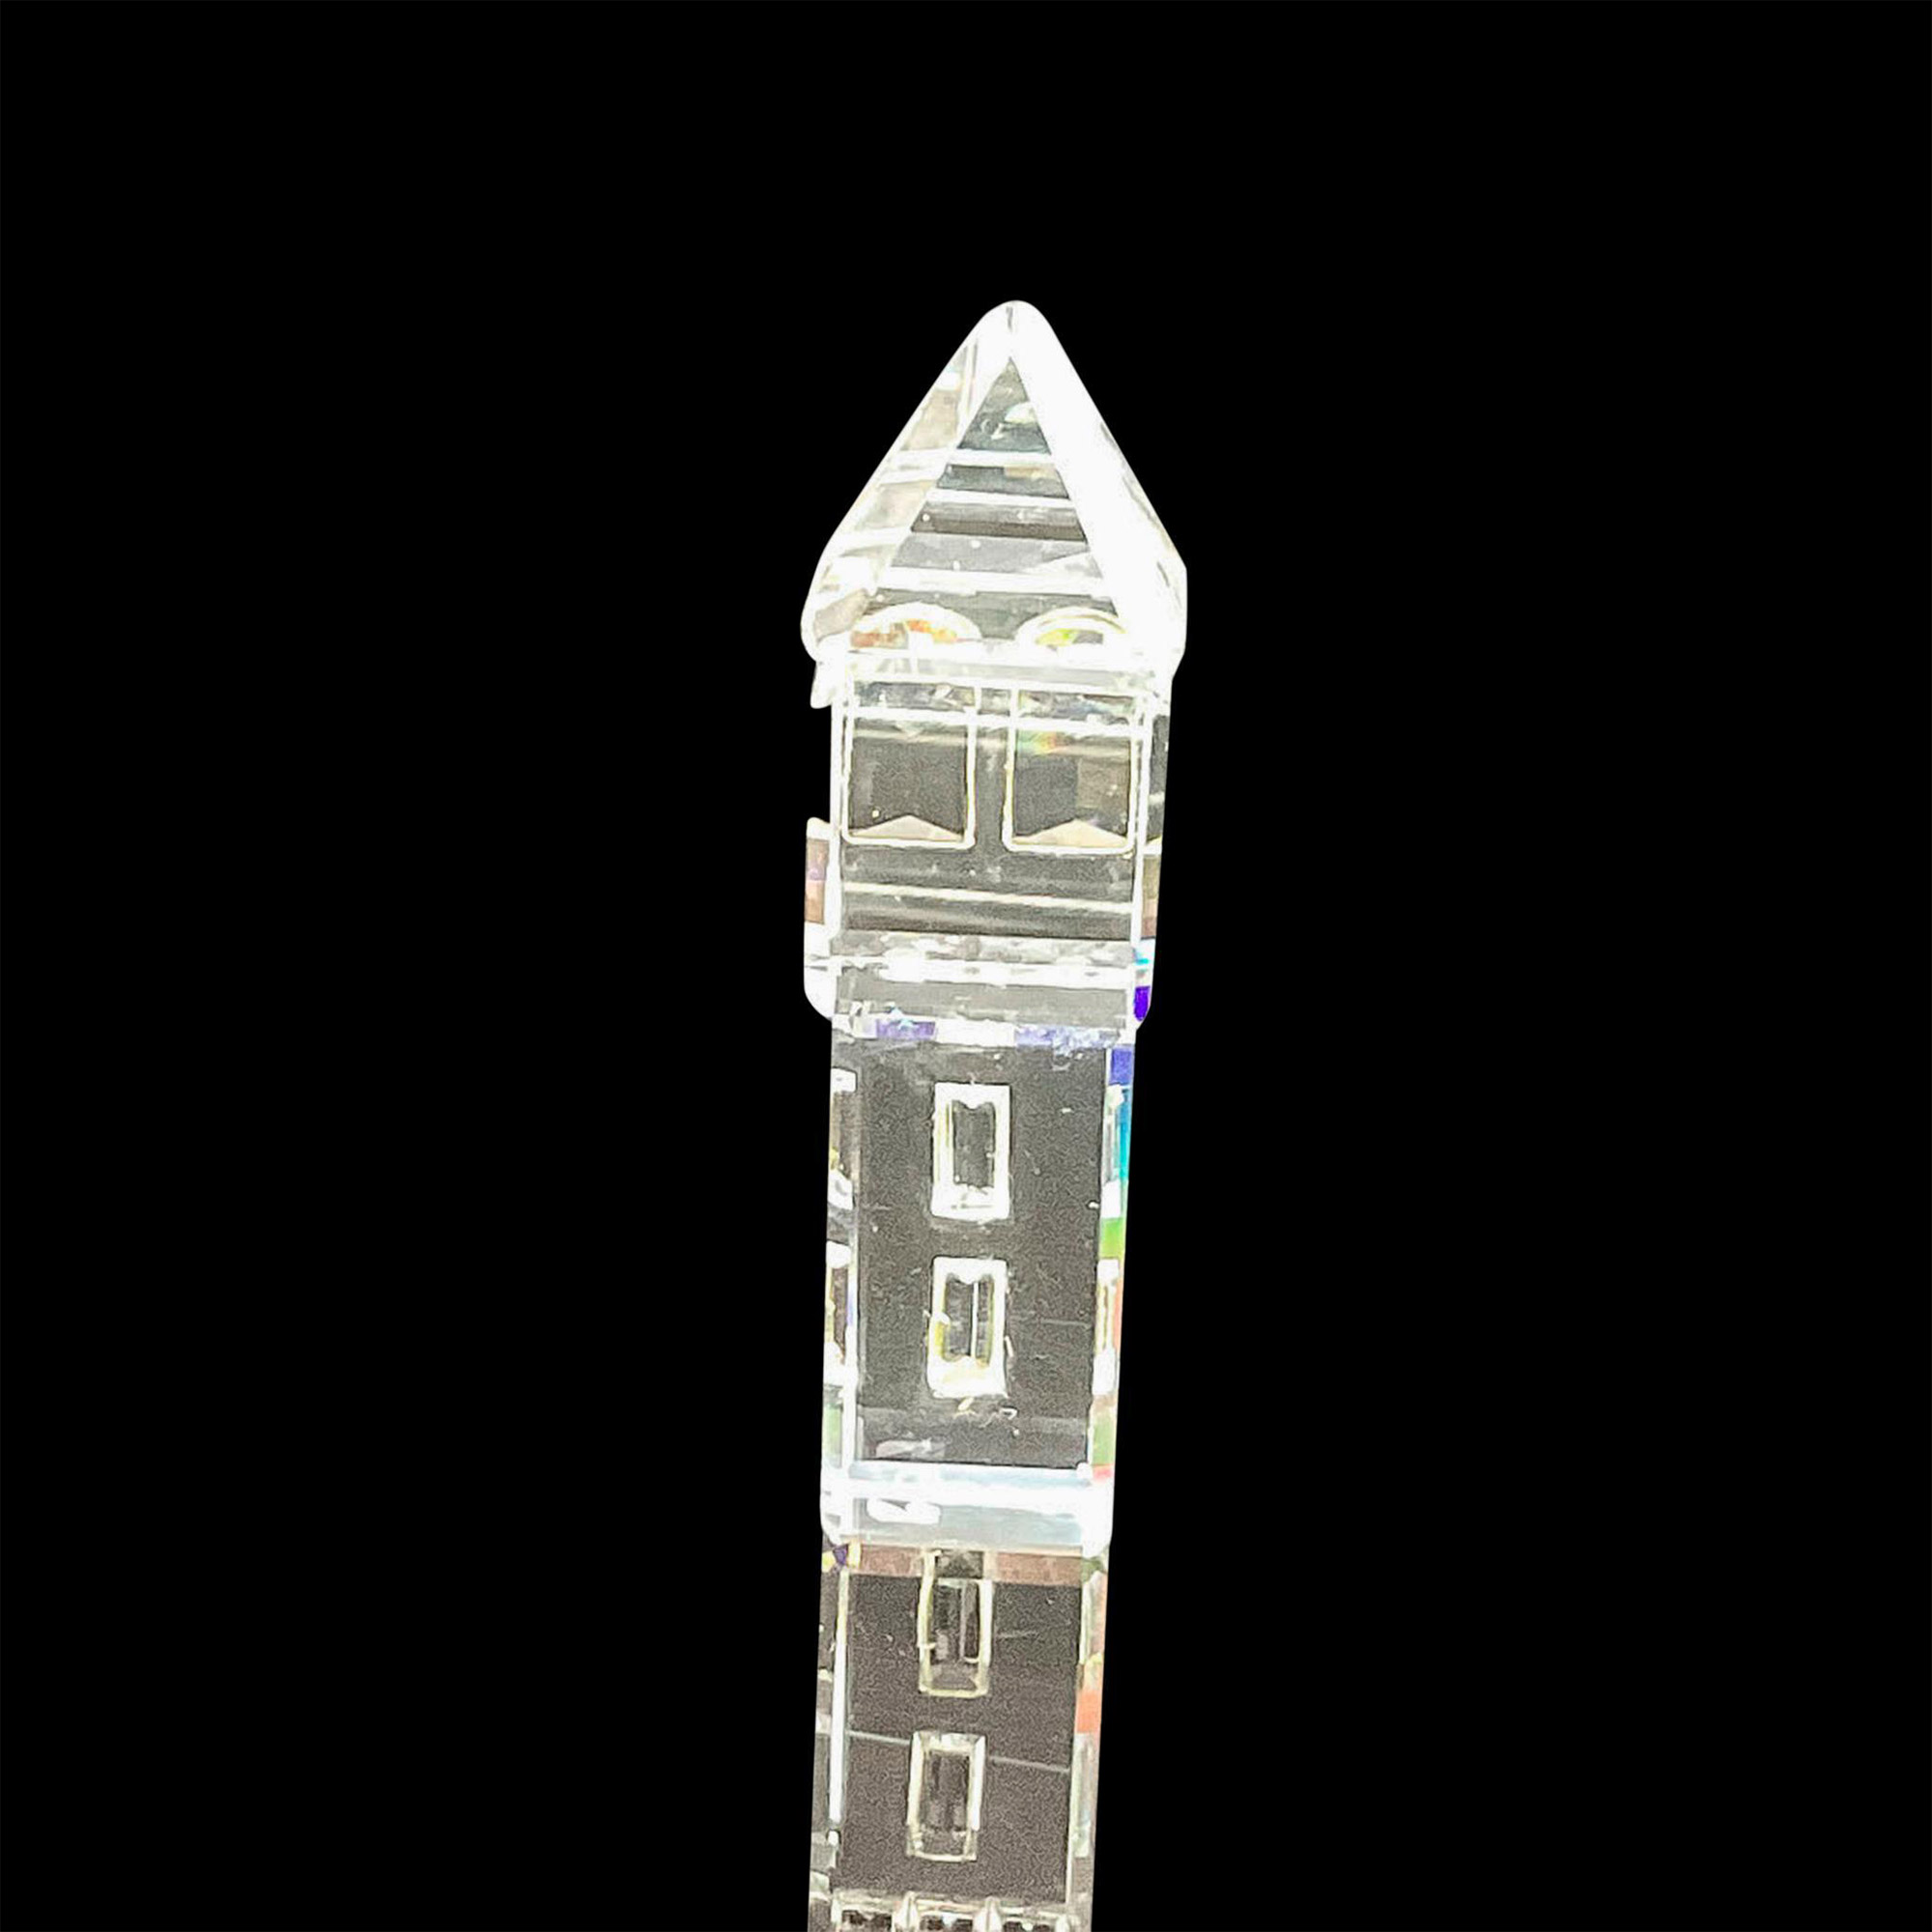 Swarovski Silver Crystal Figurine, The City Tower Building - Image 2 of 4